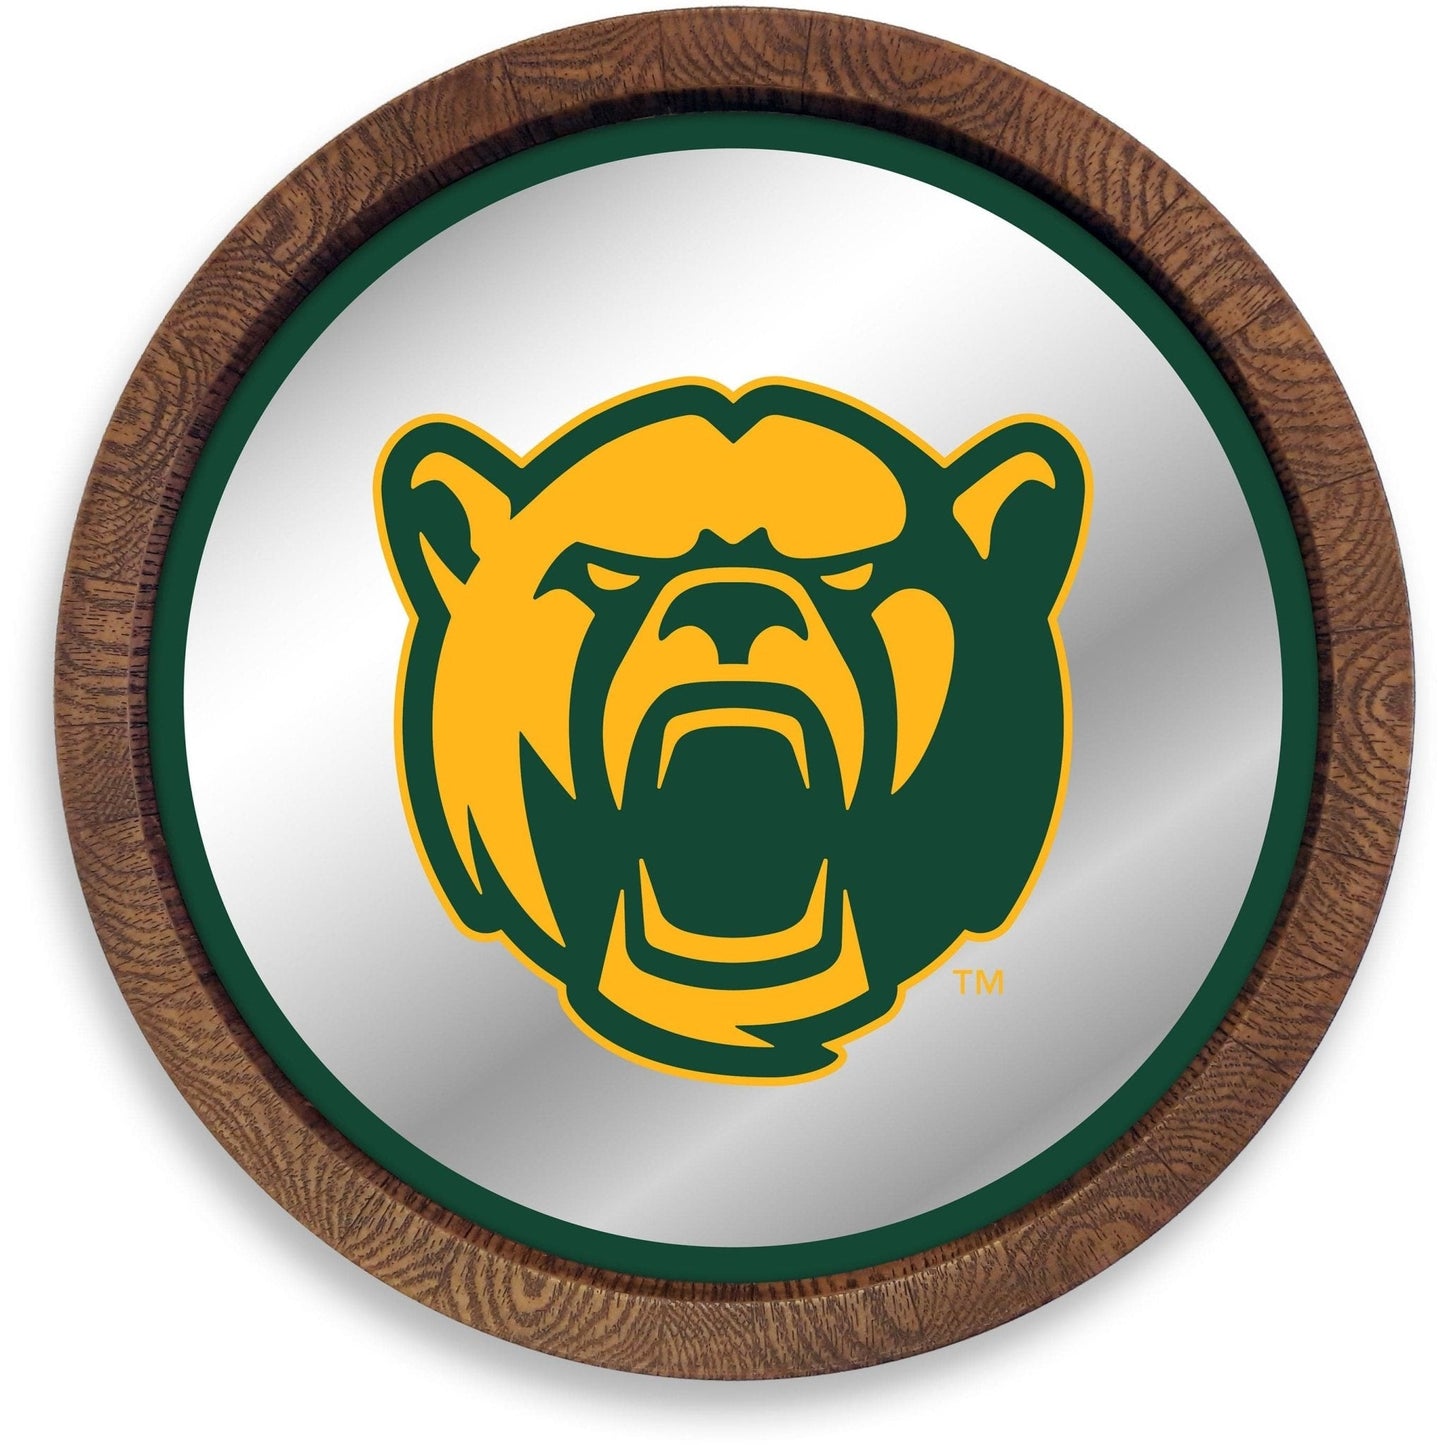 Baylor Bears: Bear - "Faux" Barrel Top Mirrored Wall Sign - The Fan-Brand